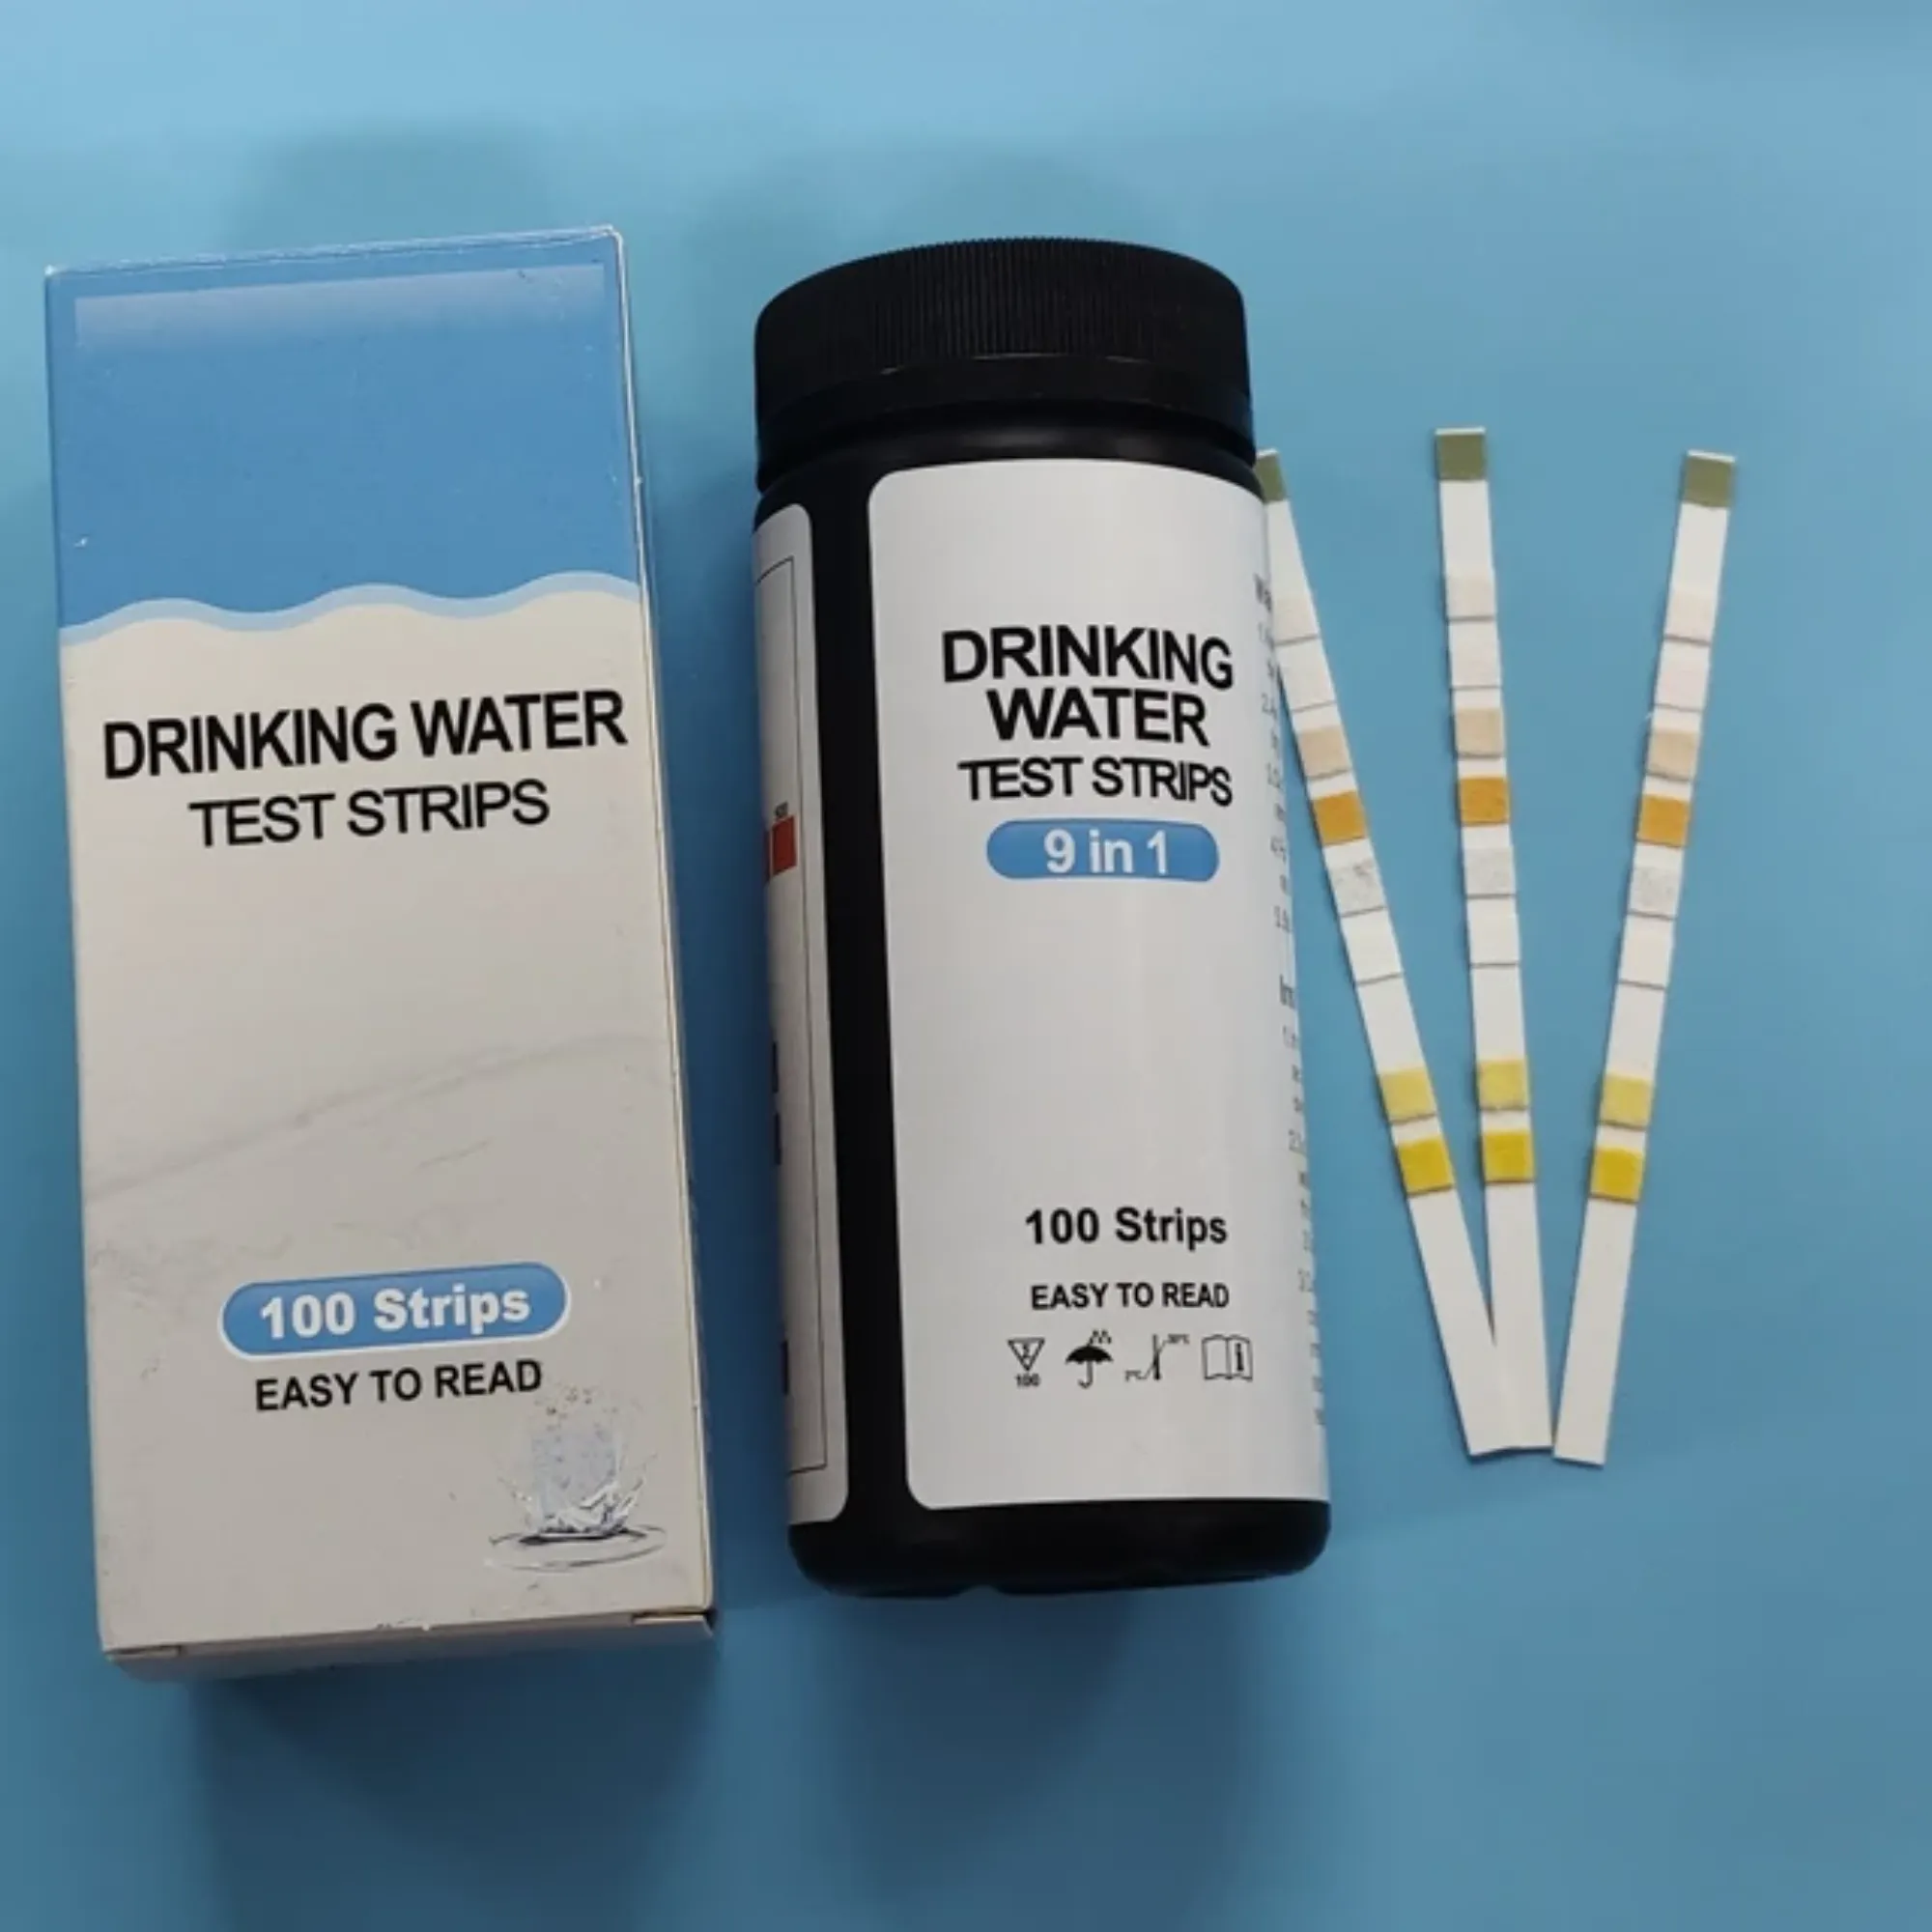 Drinking water test strips 9 in 1